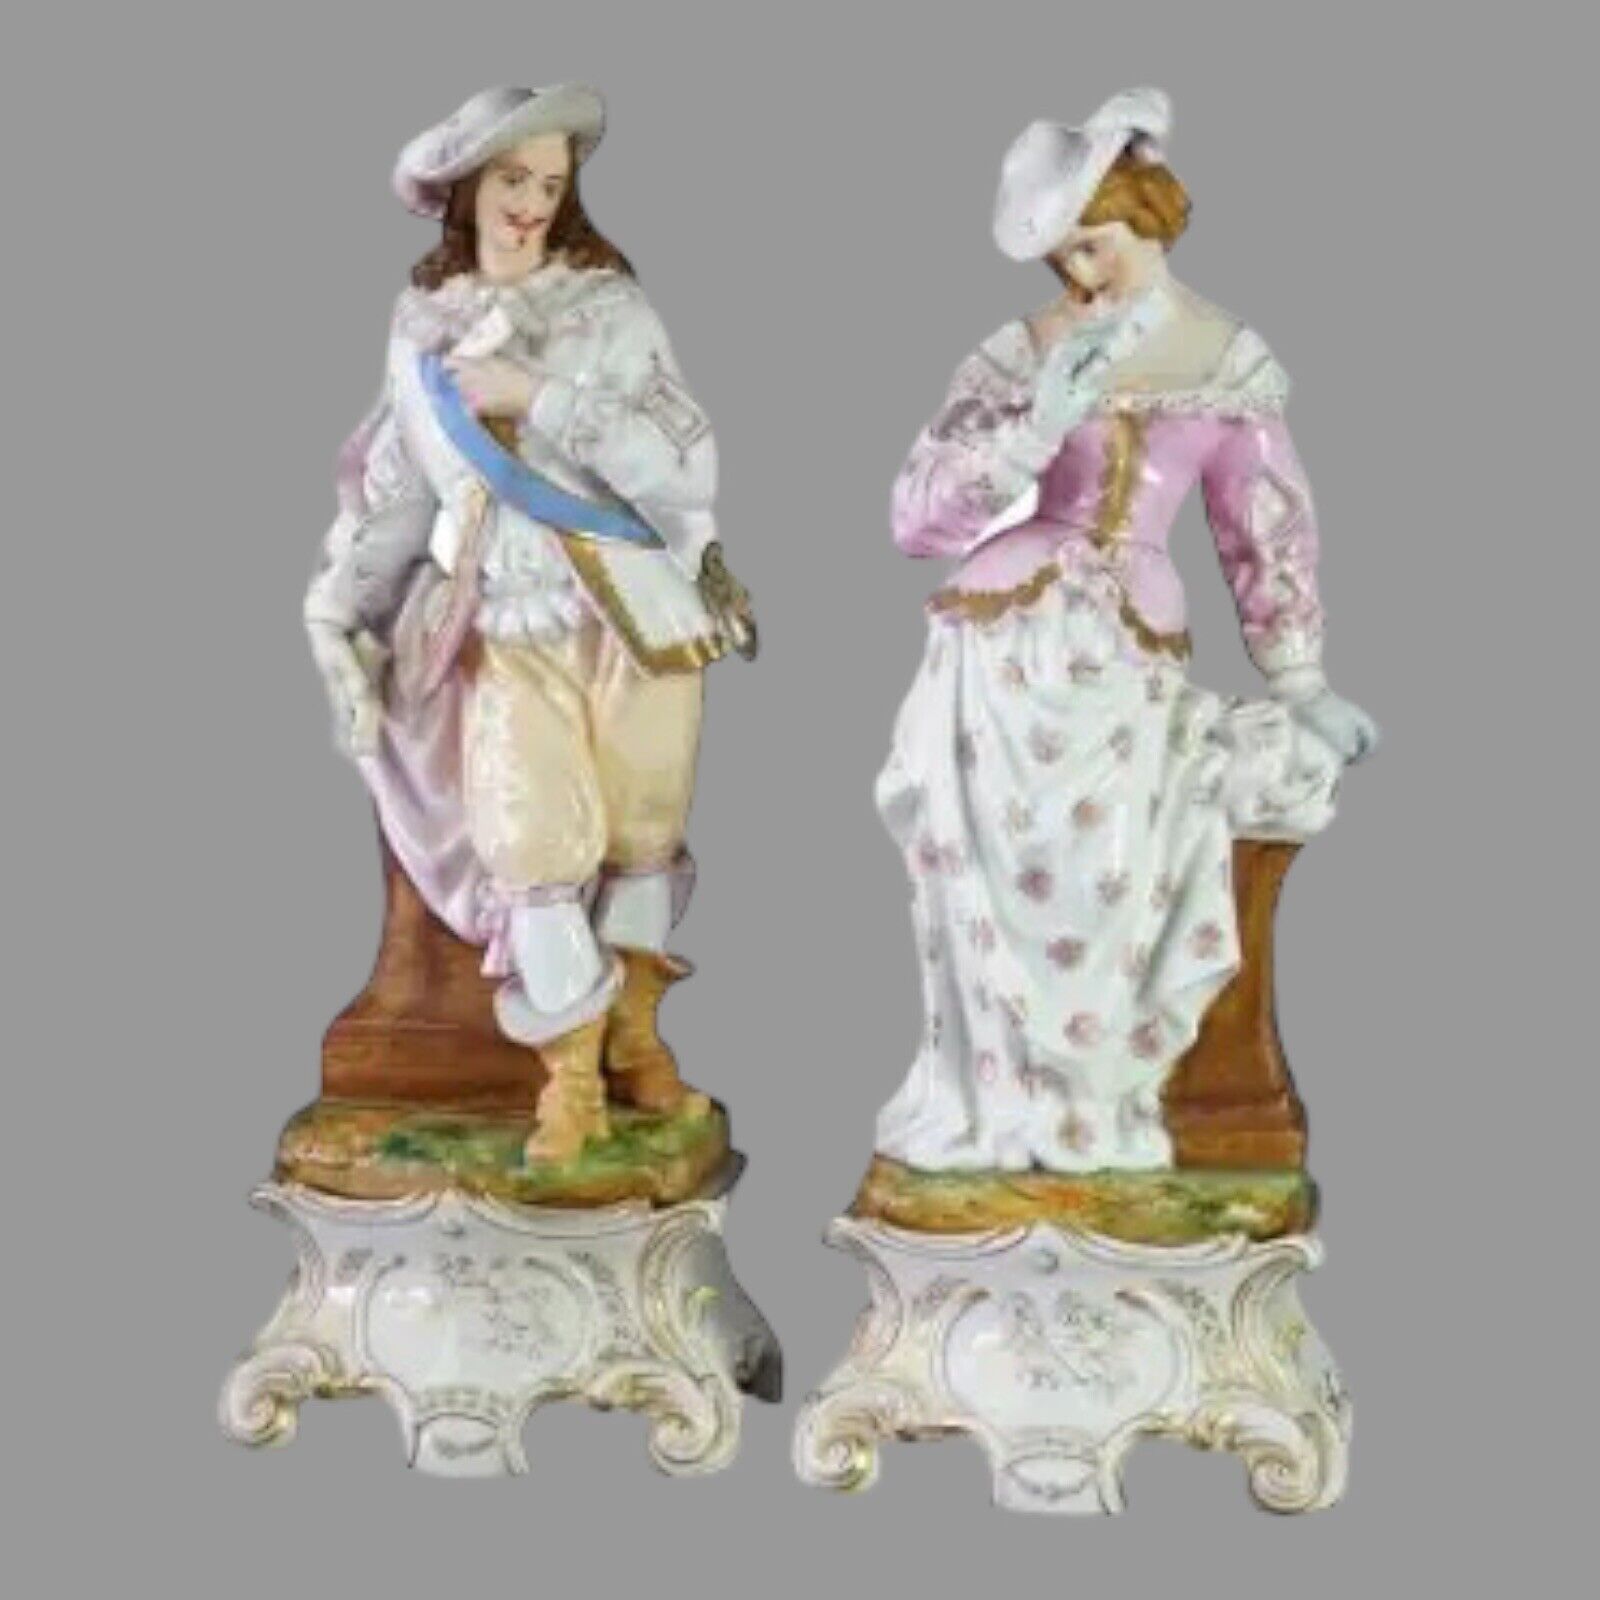 Antique Pair of French Porcelain Figural Statues & Plinths by G. R. Brevet c1880